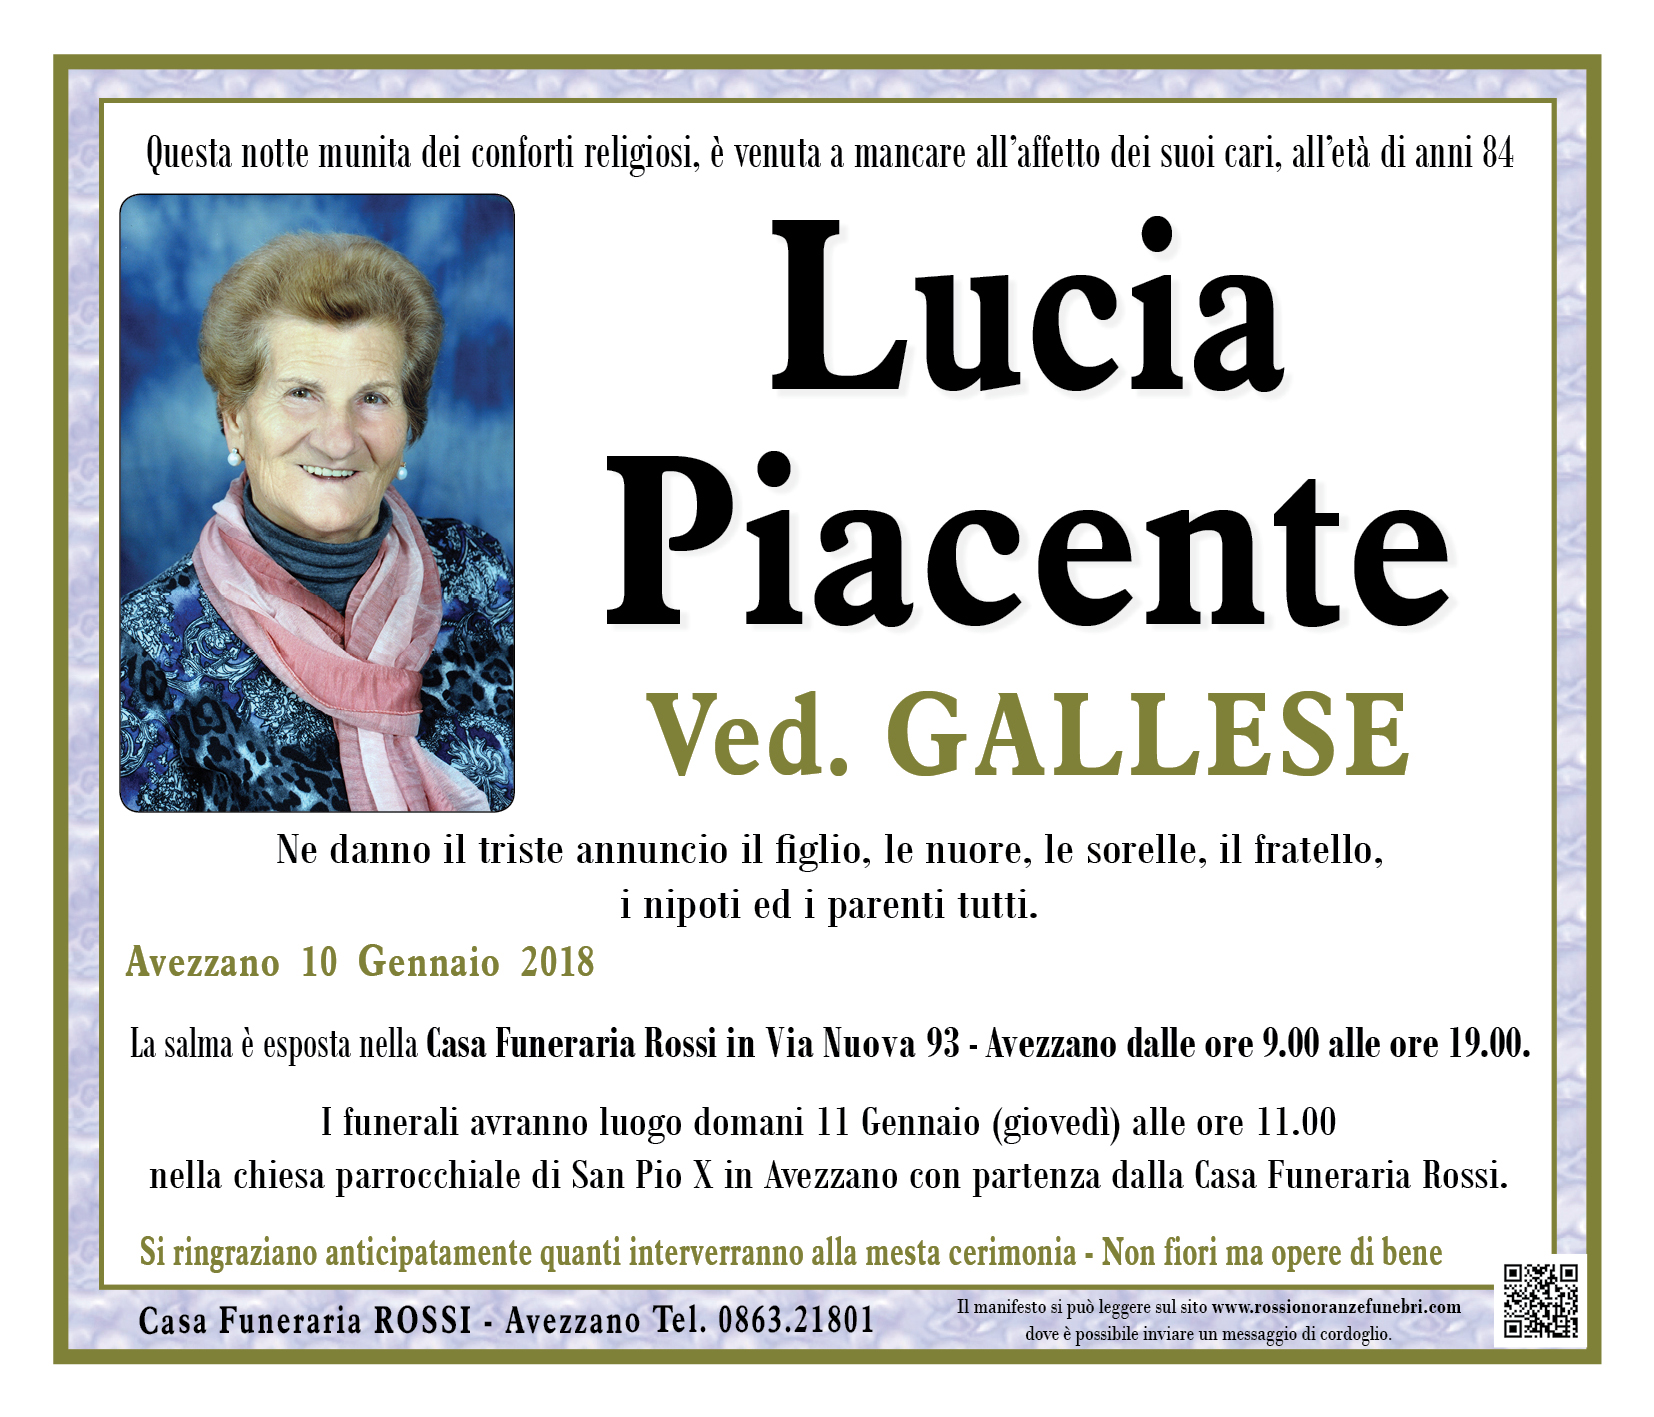 Lucia Piacente